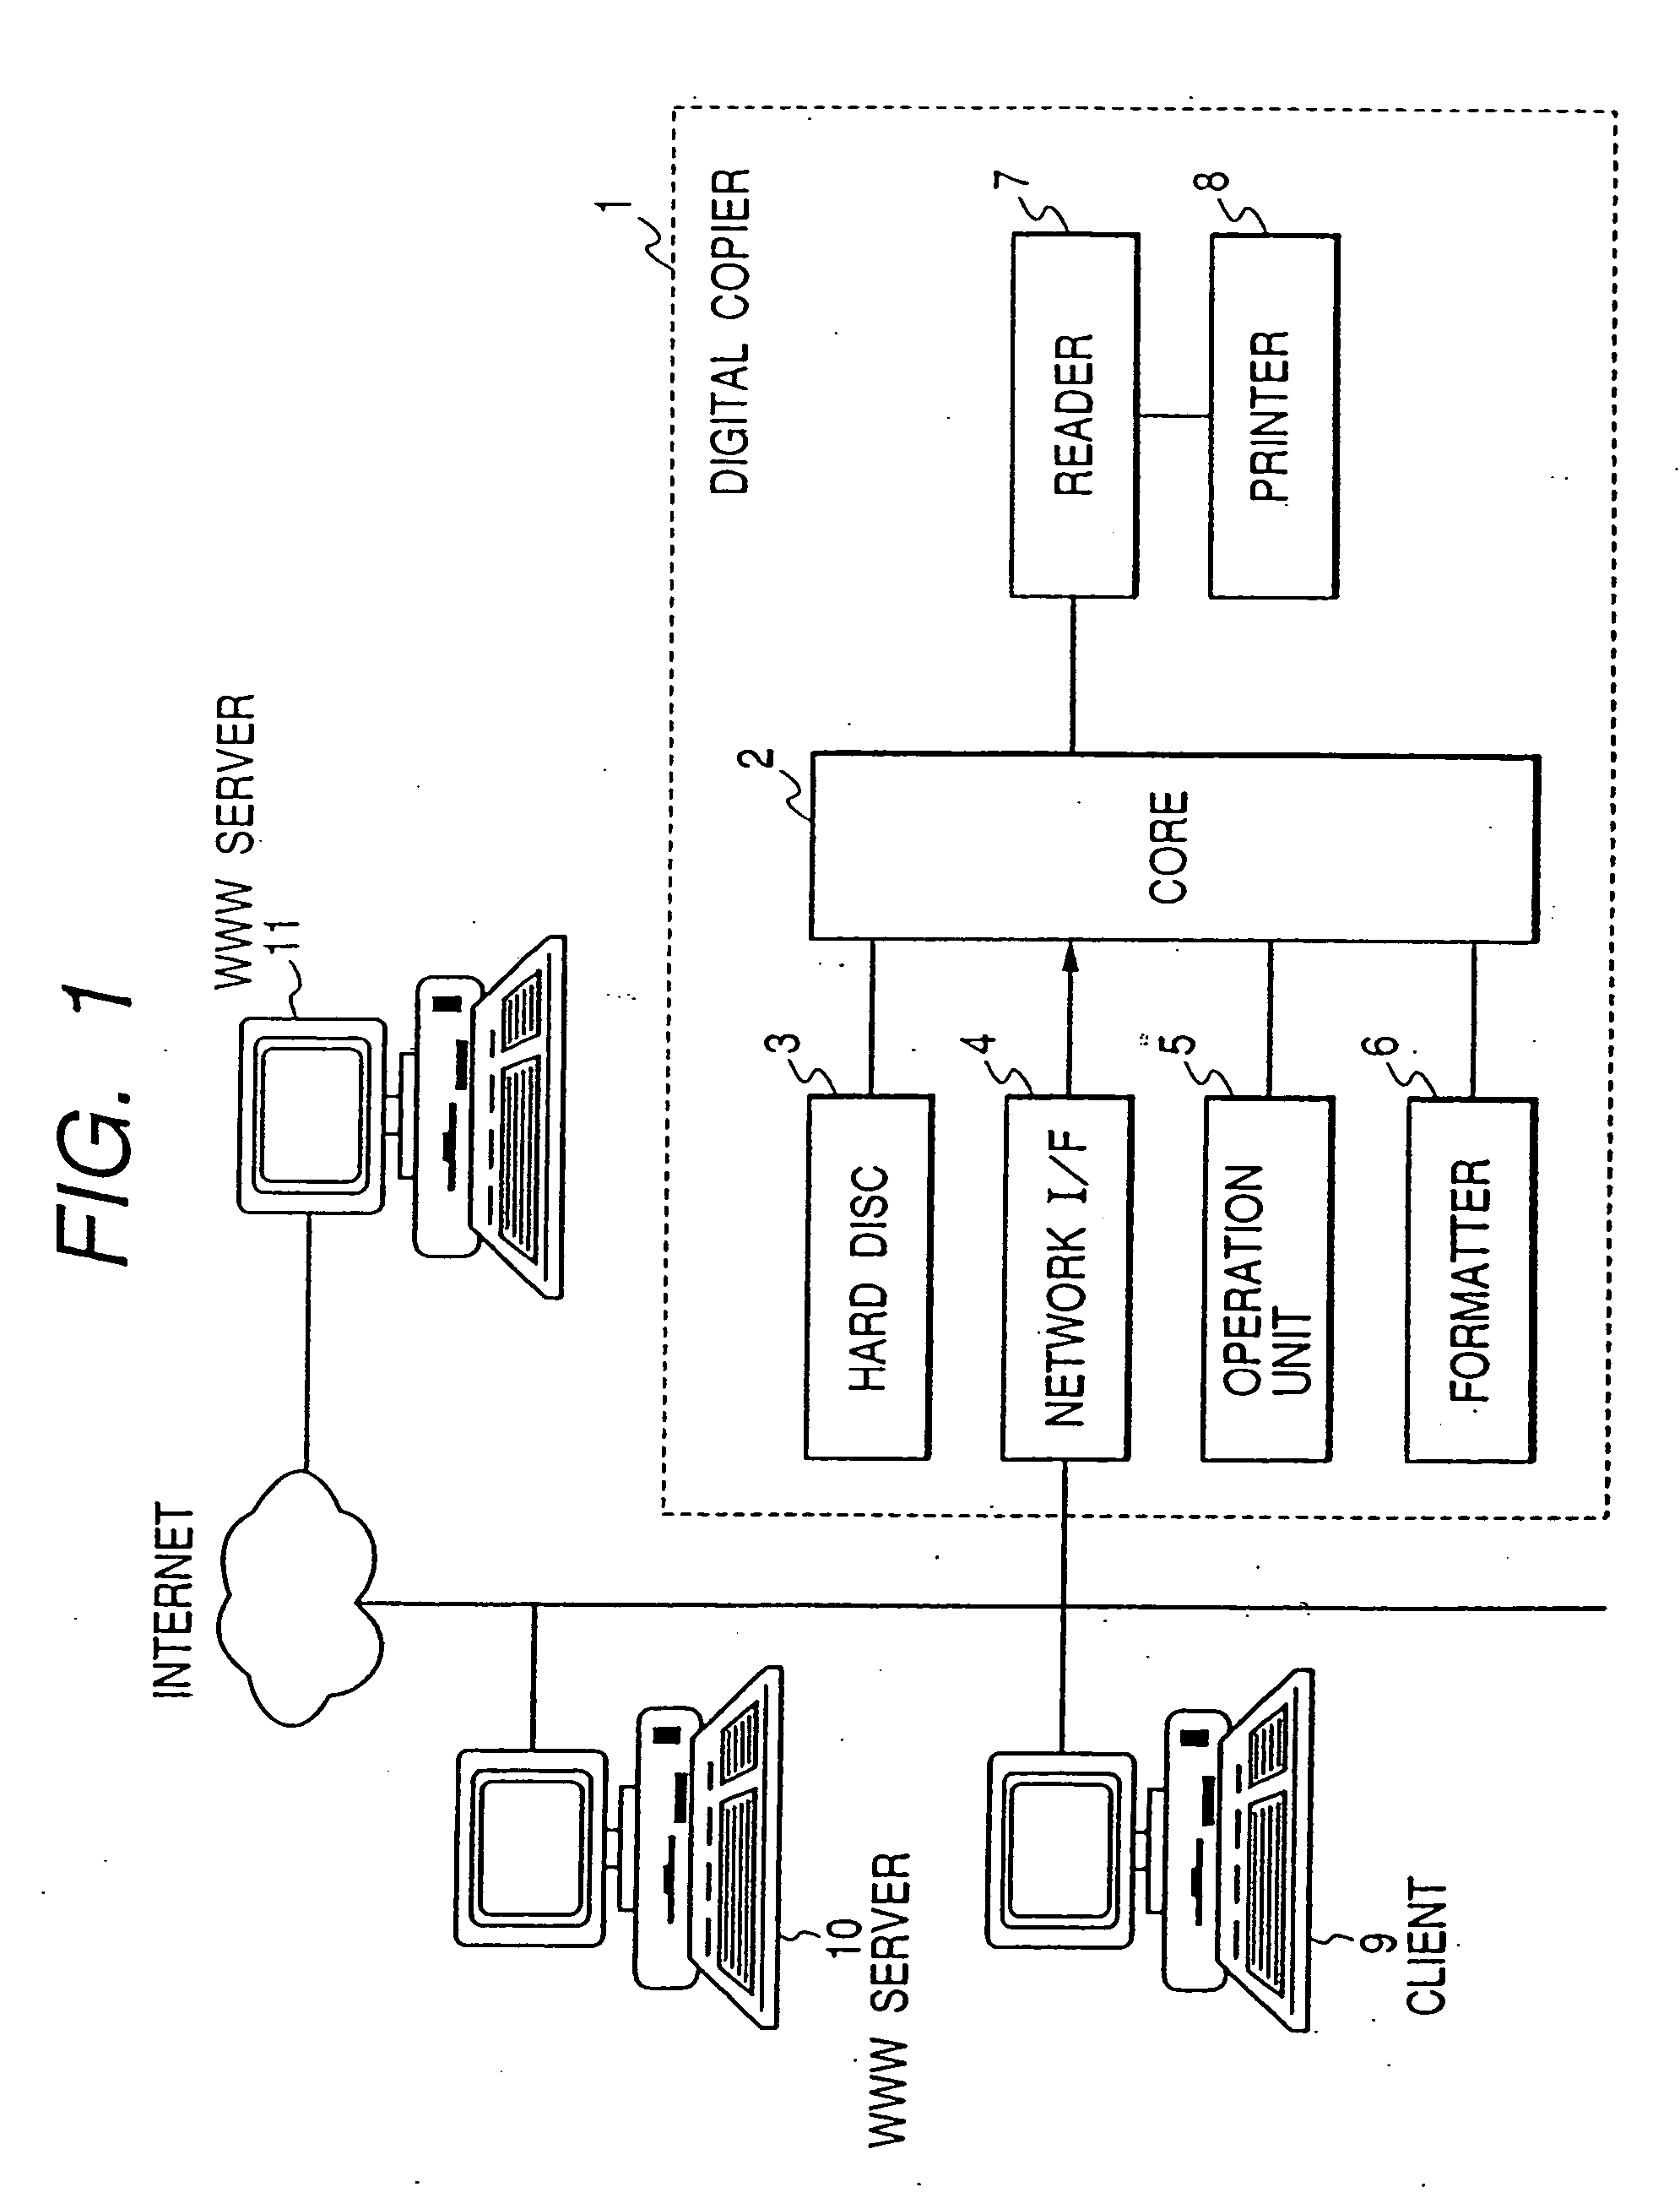 Image forming apparatus, image forming method, and storing medium